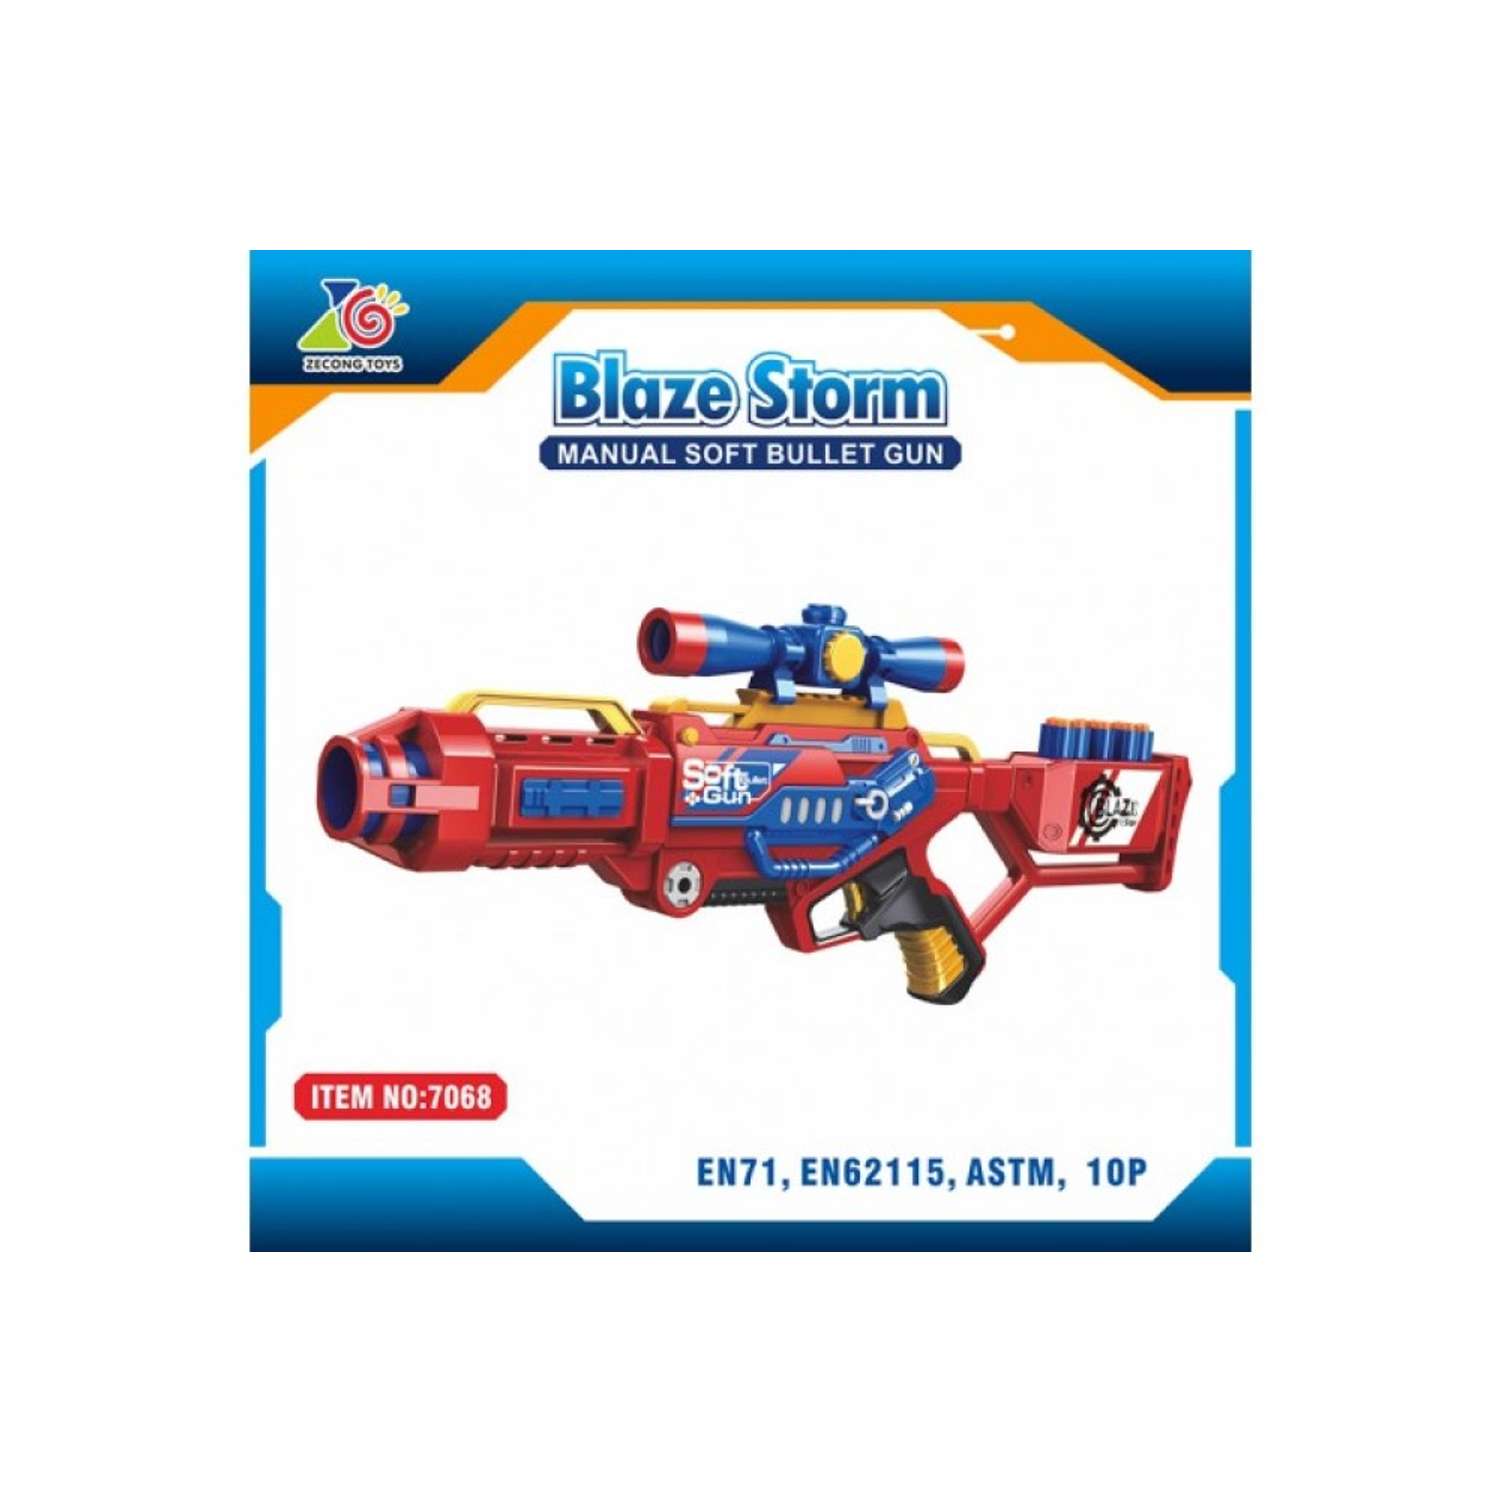 Автомат Blaze Storm Zecong Toys с мягкими пулями - фото 2